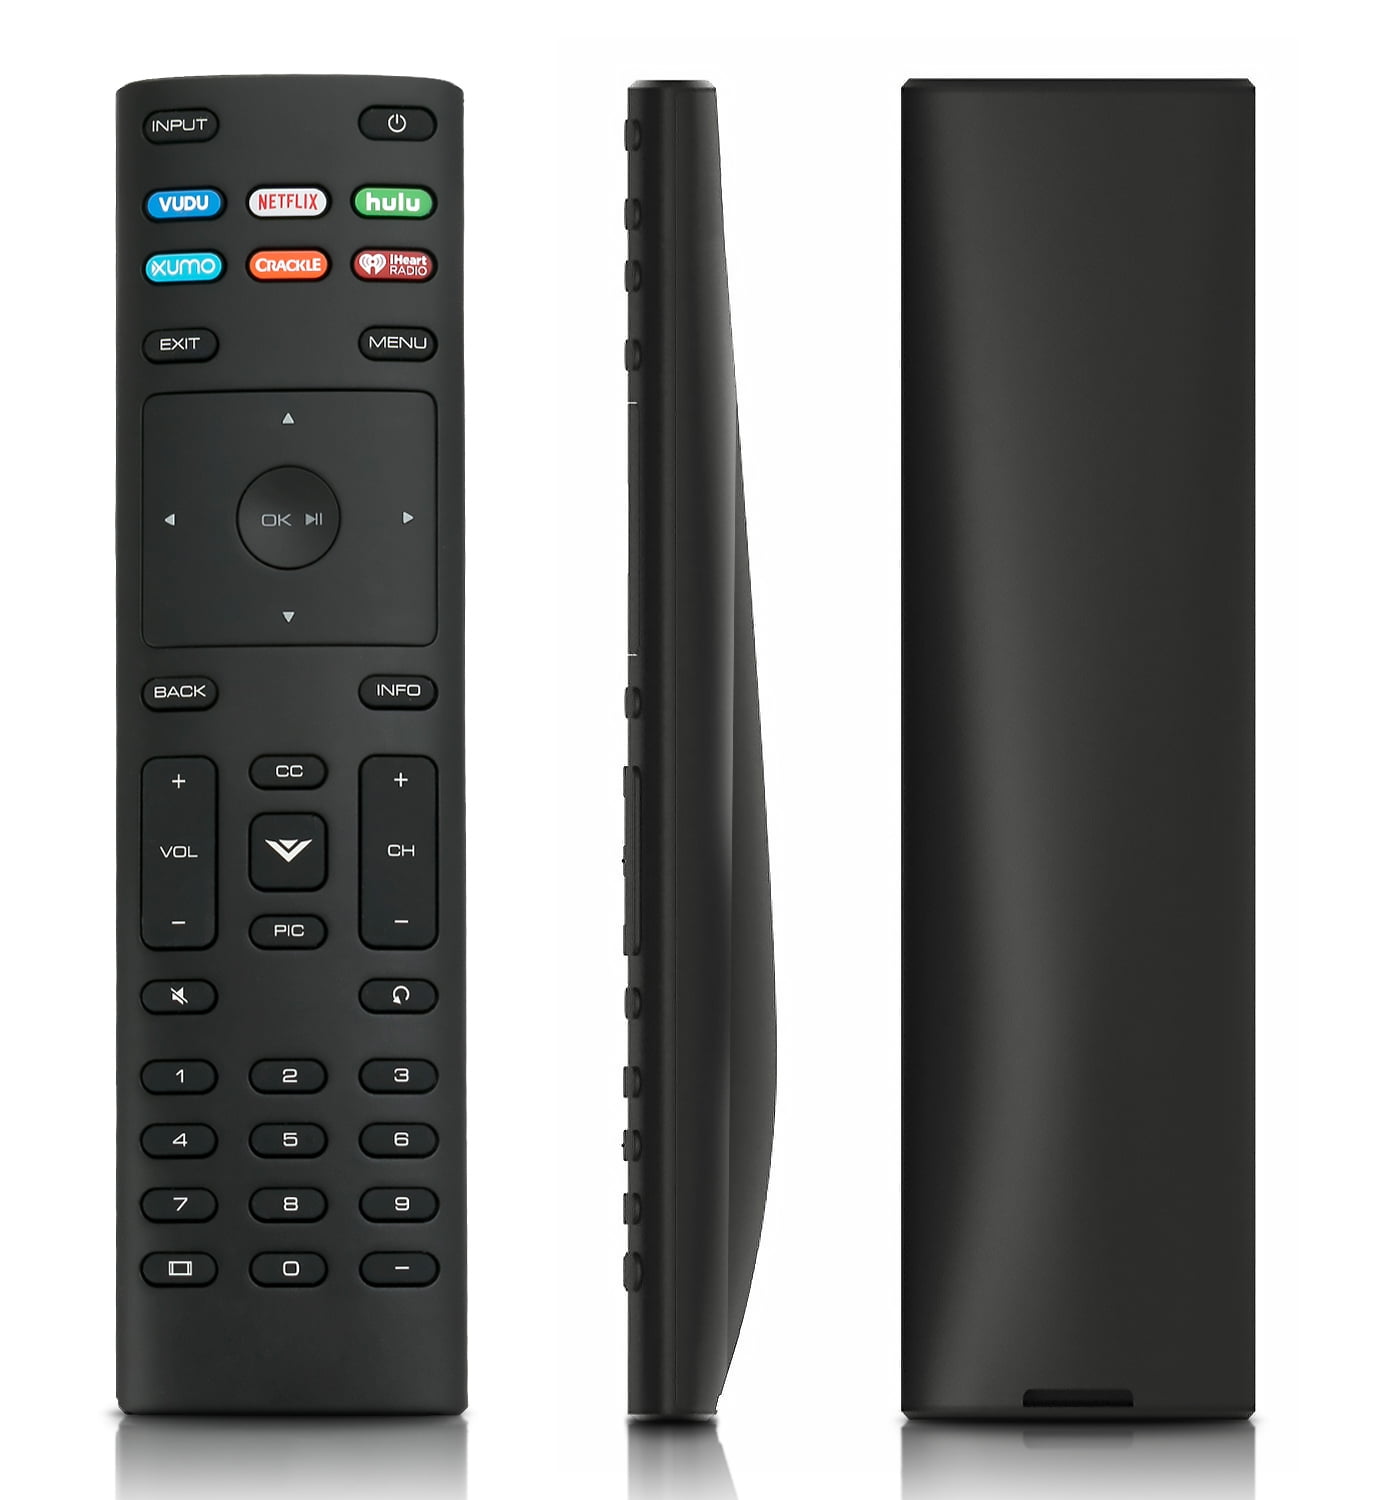 New Remote Control Xrt136 Fits For Vizio Smart Tv D43f F1 D43f F1